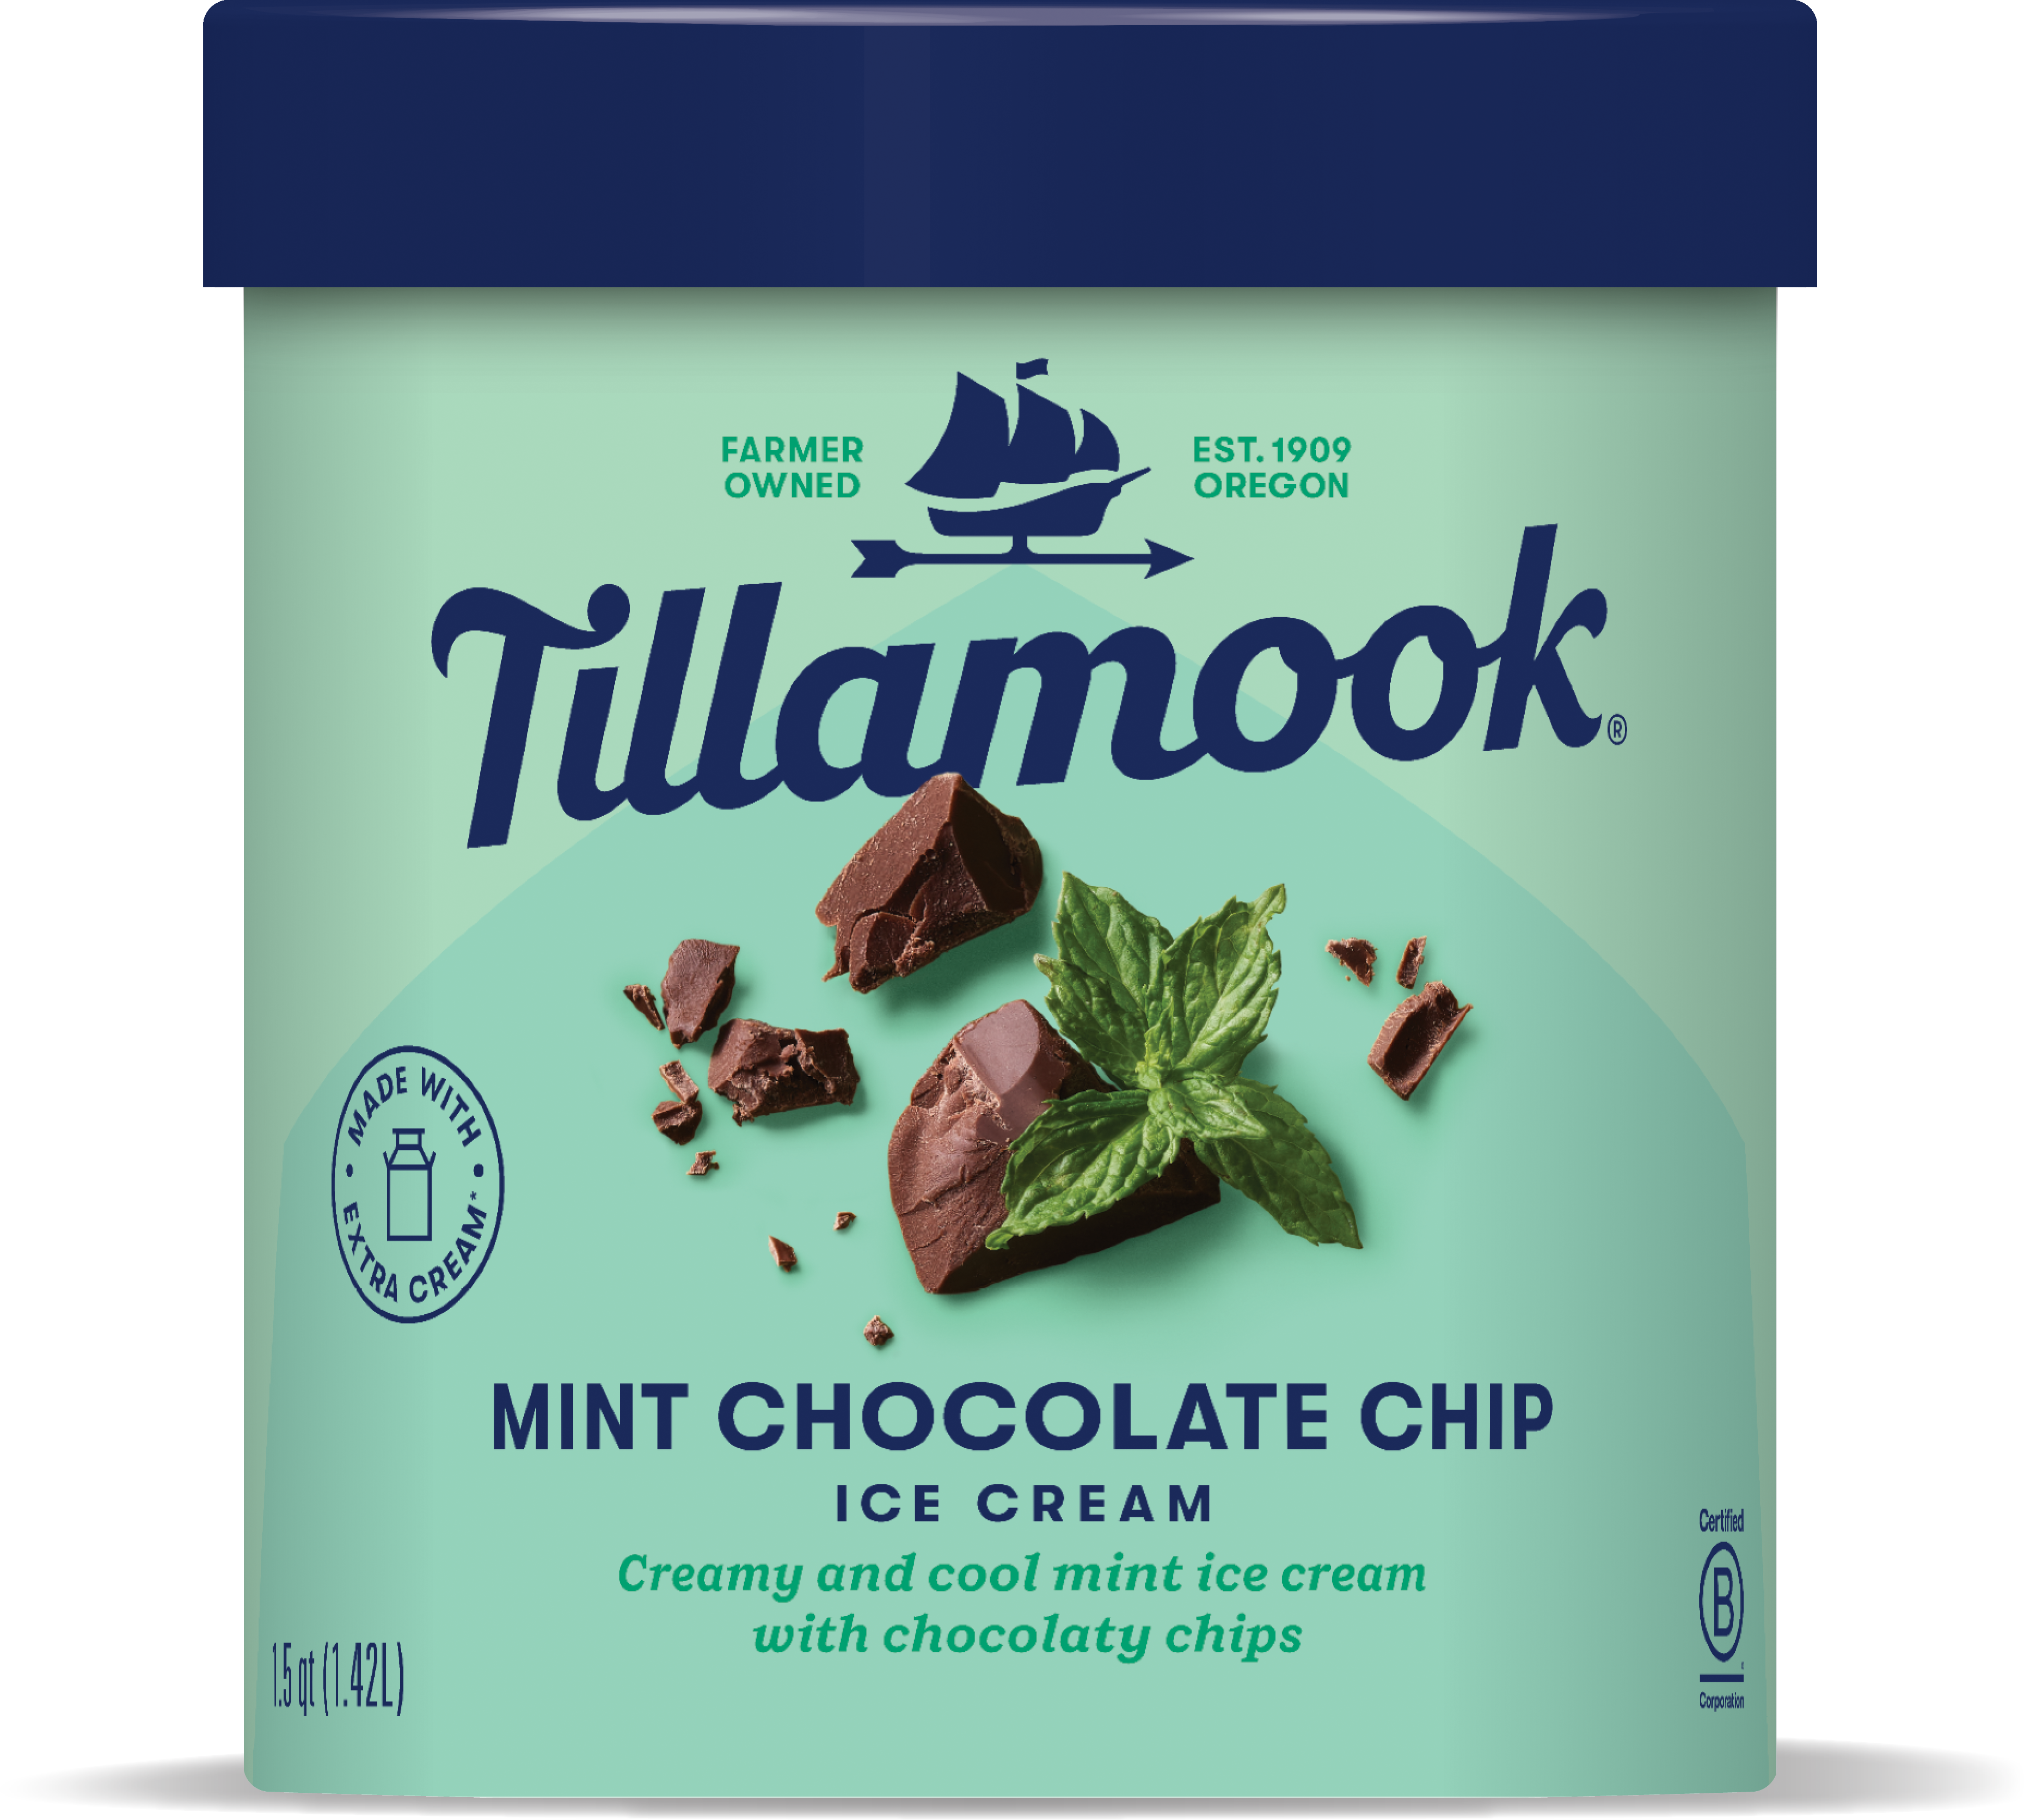 Mint Chocolate Chip Ice Cream - Tillamook